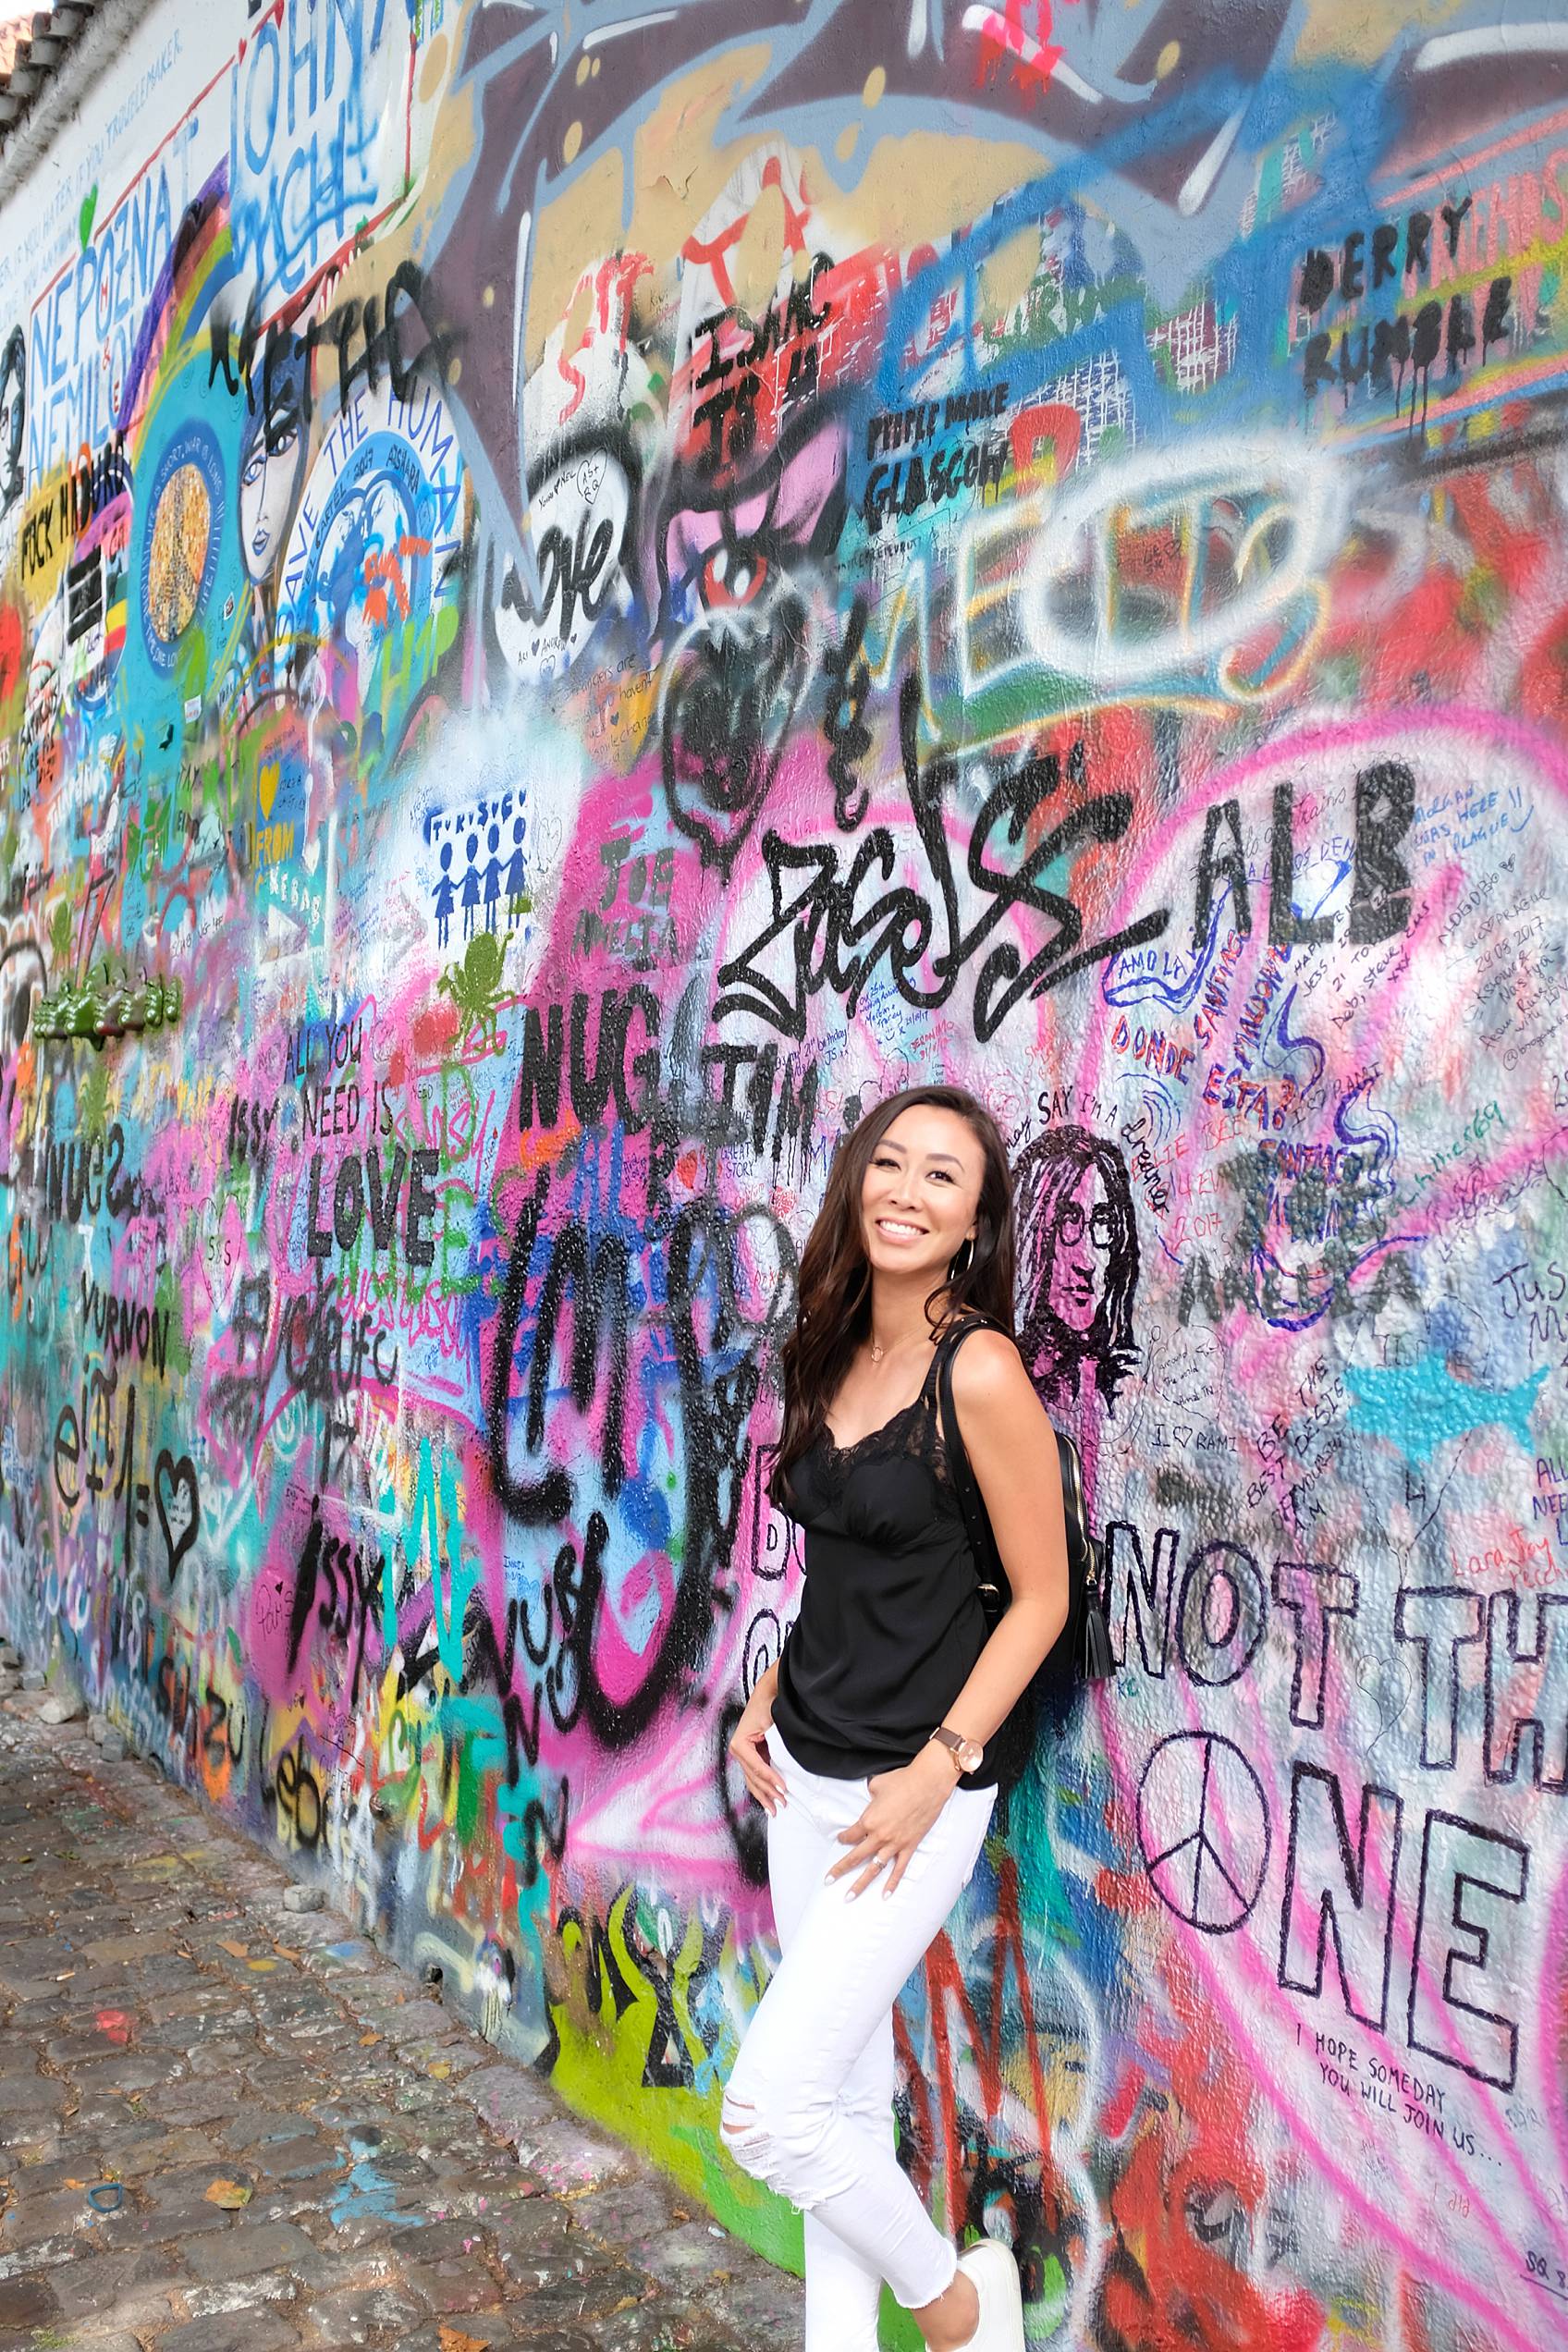 Diana Elizabeth lifestyle blogger leaning against graffiti wall called John Lennon wall in Prague